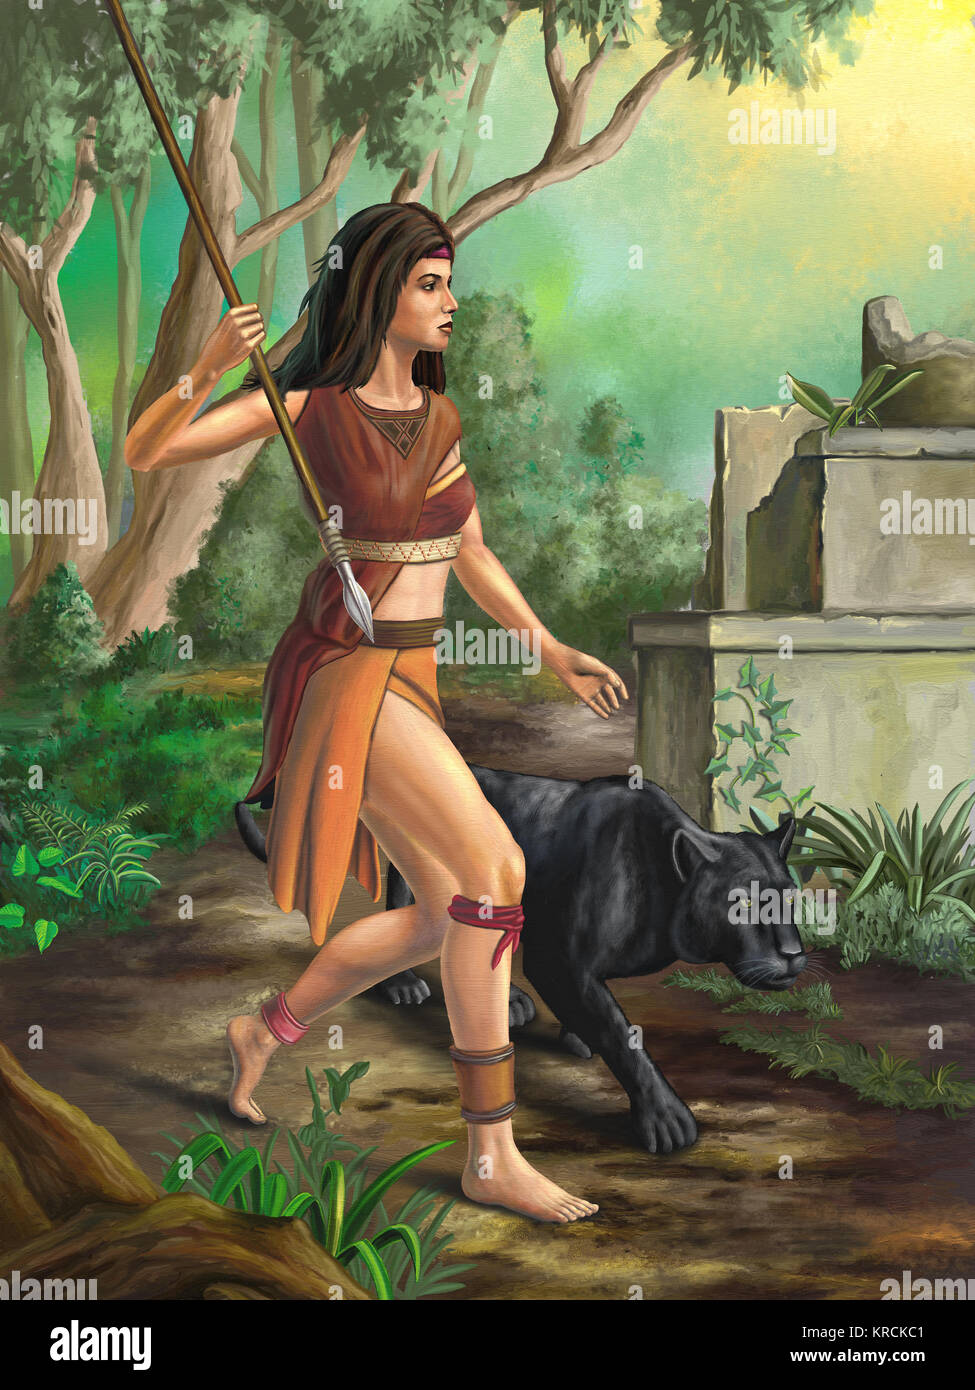 Amazon warrior erkunden den Wald. Digitale Illustration Stockfotografie -  Alamy